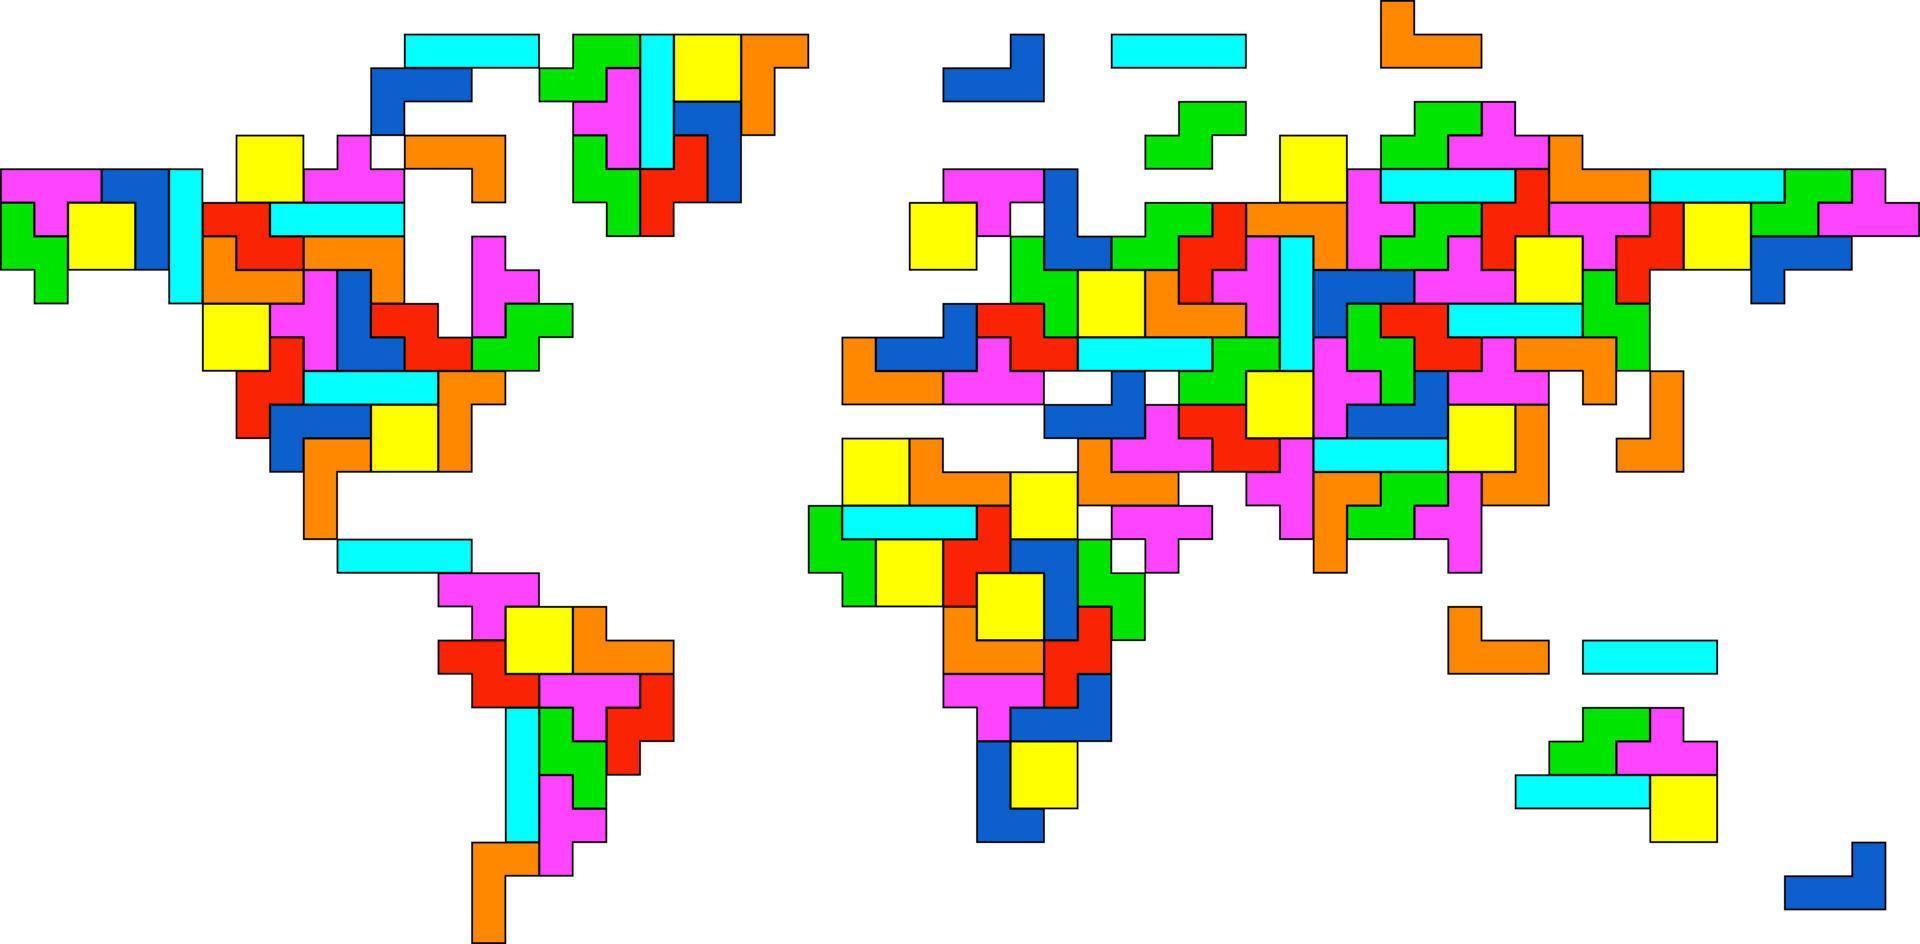 Vector world map colorful blocks